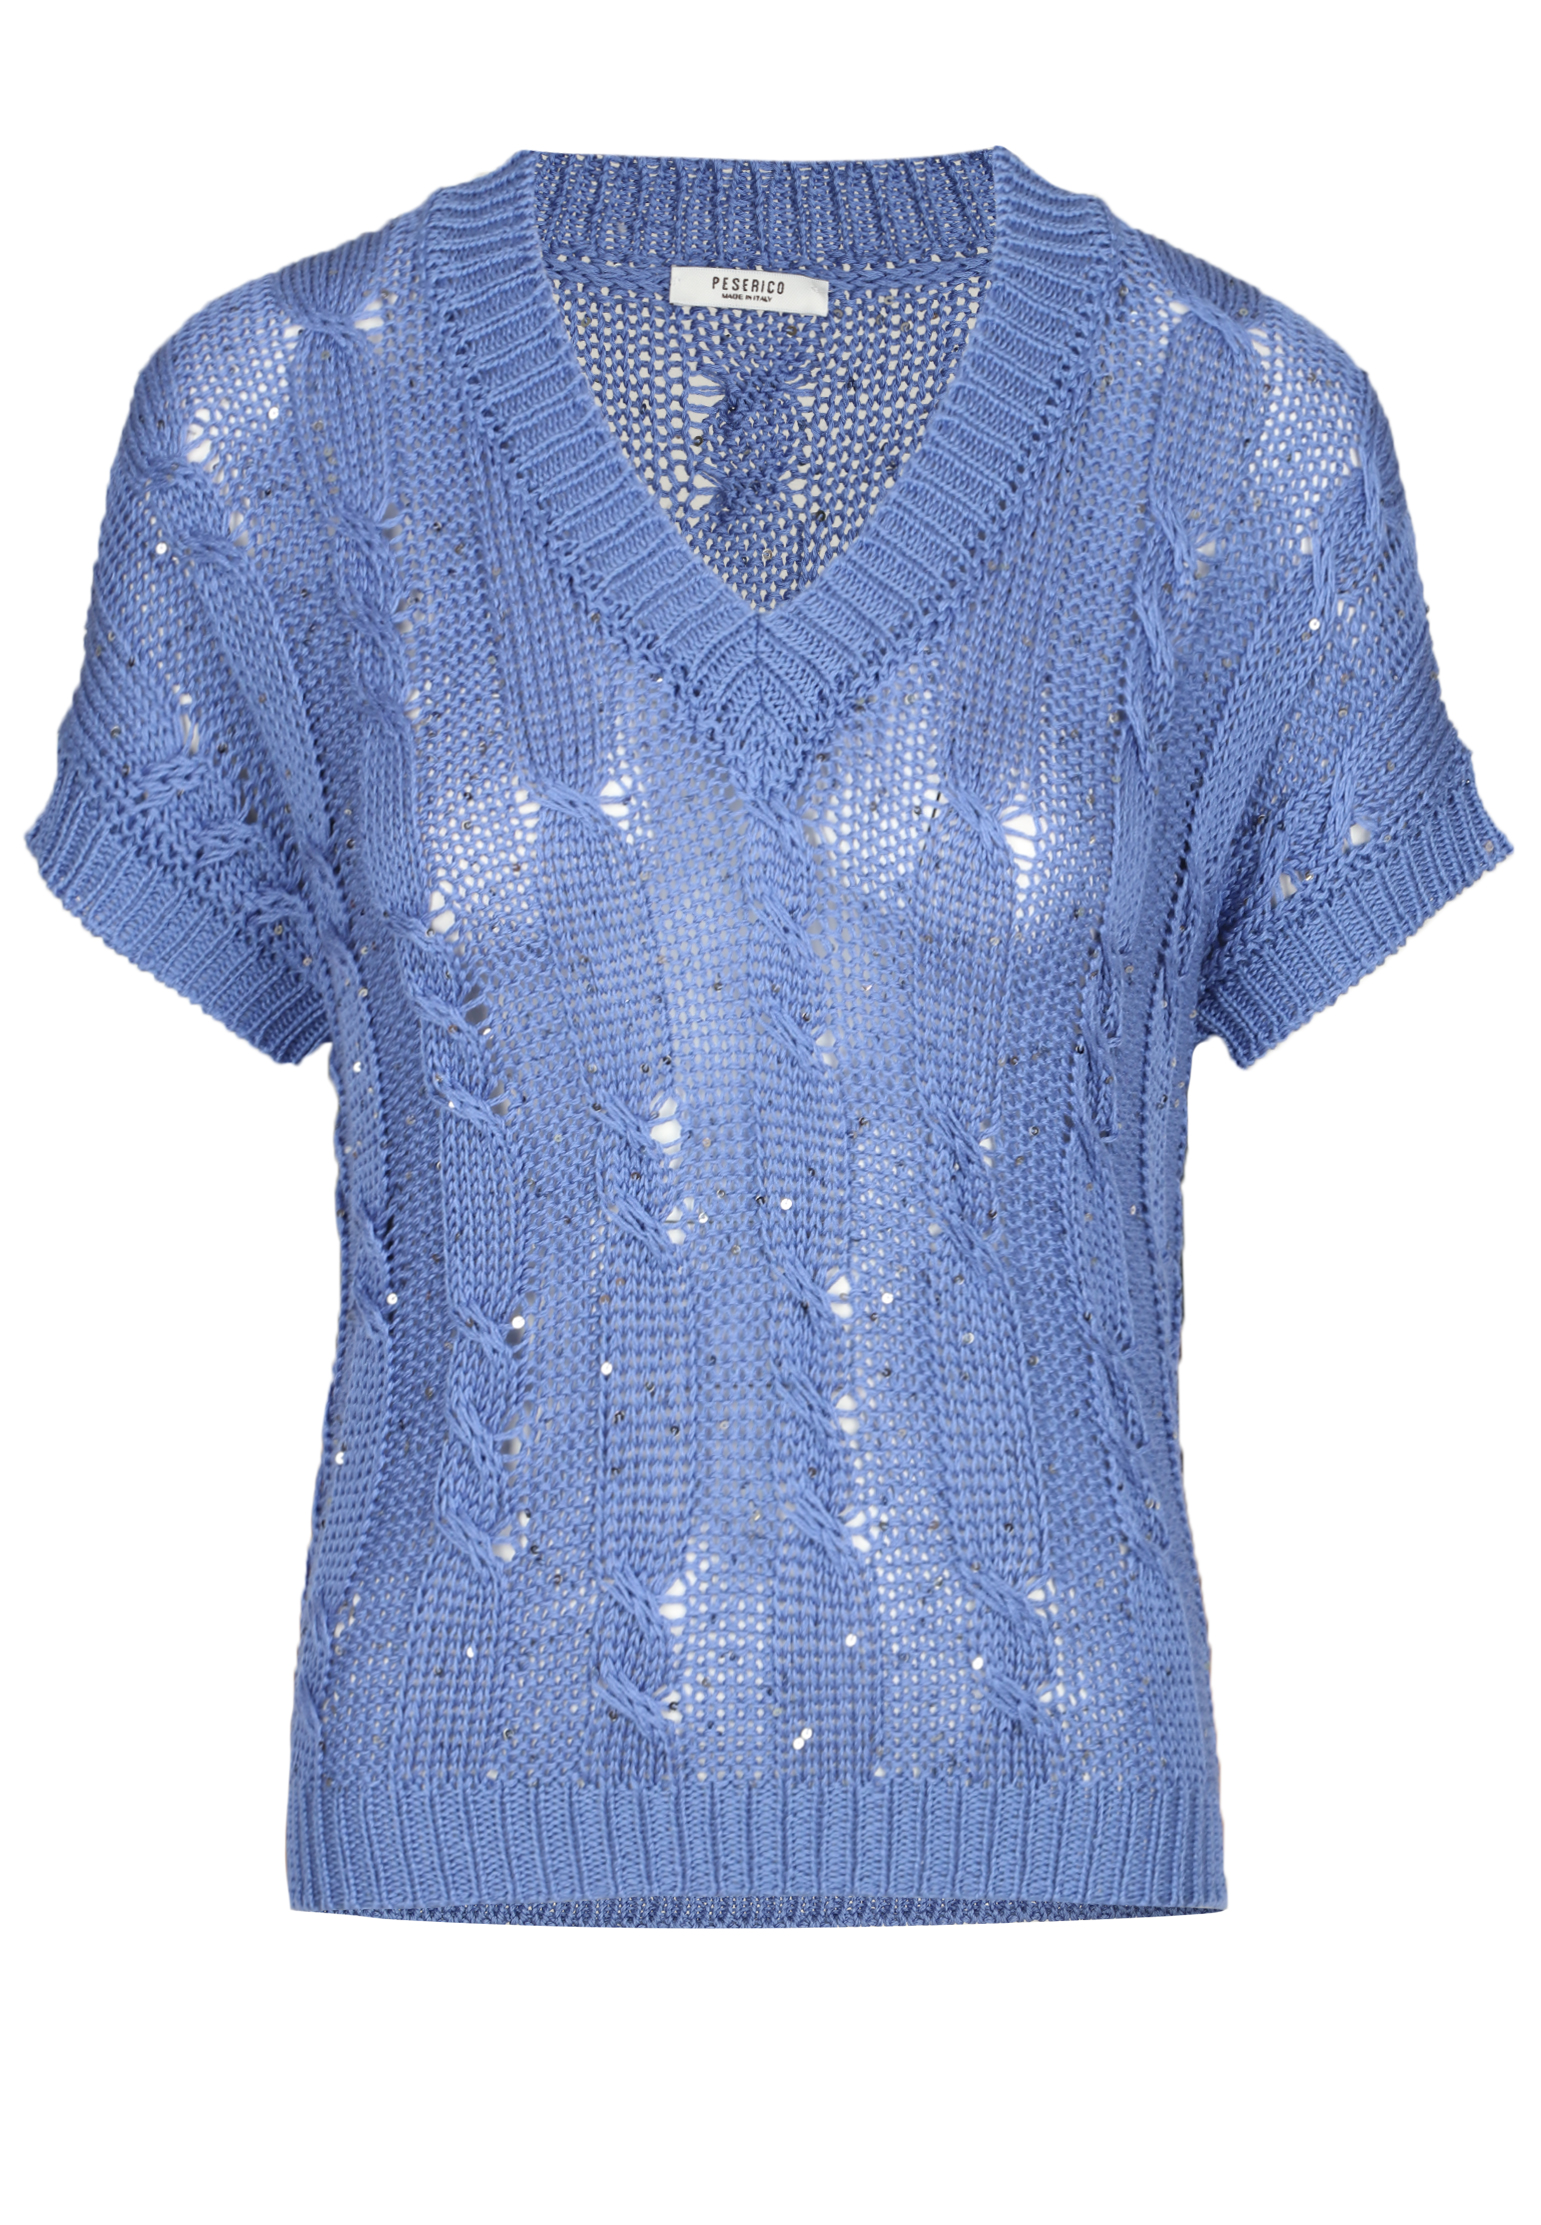 Пуловер PESERICO Синий, размер 40 154211 - фото 1